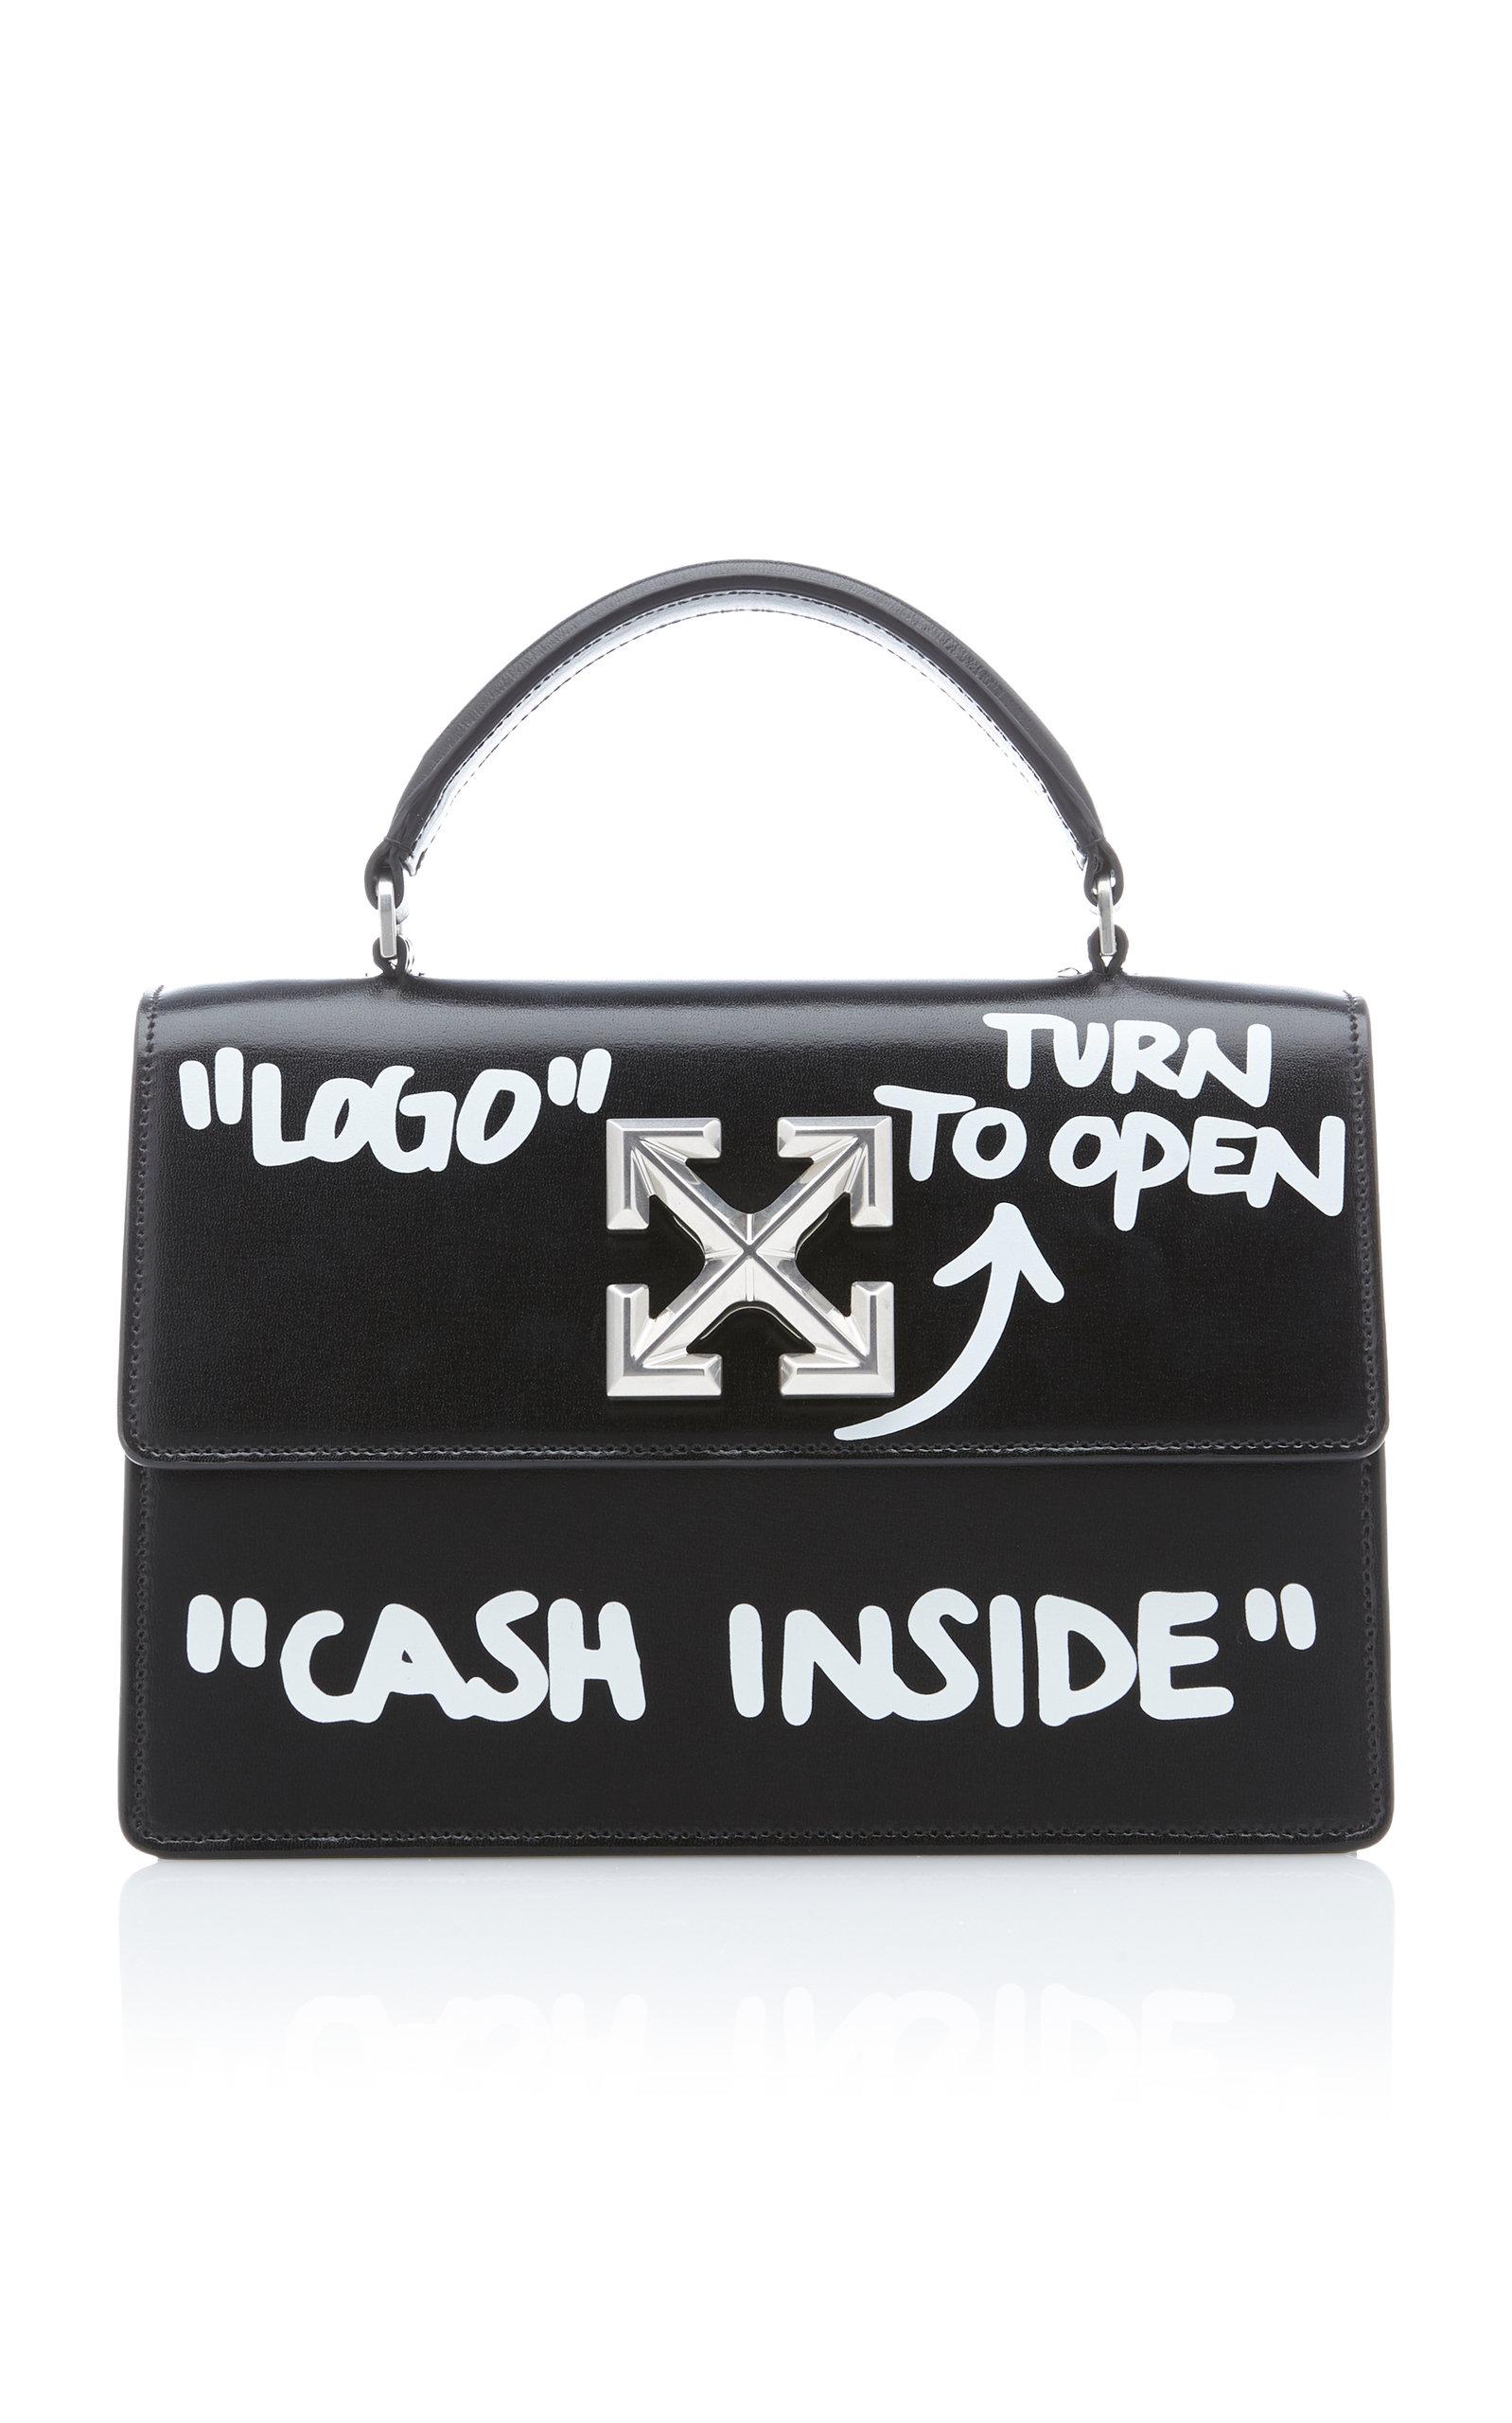 Off-White-Virgil-Cash-Inside-Bag-Trends-Fashion-Accessories-Tom